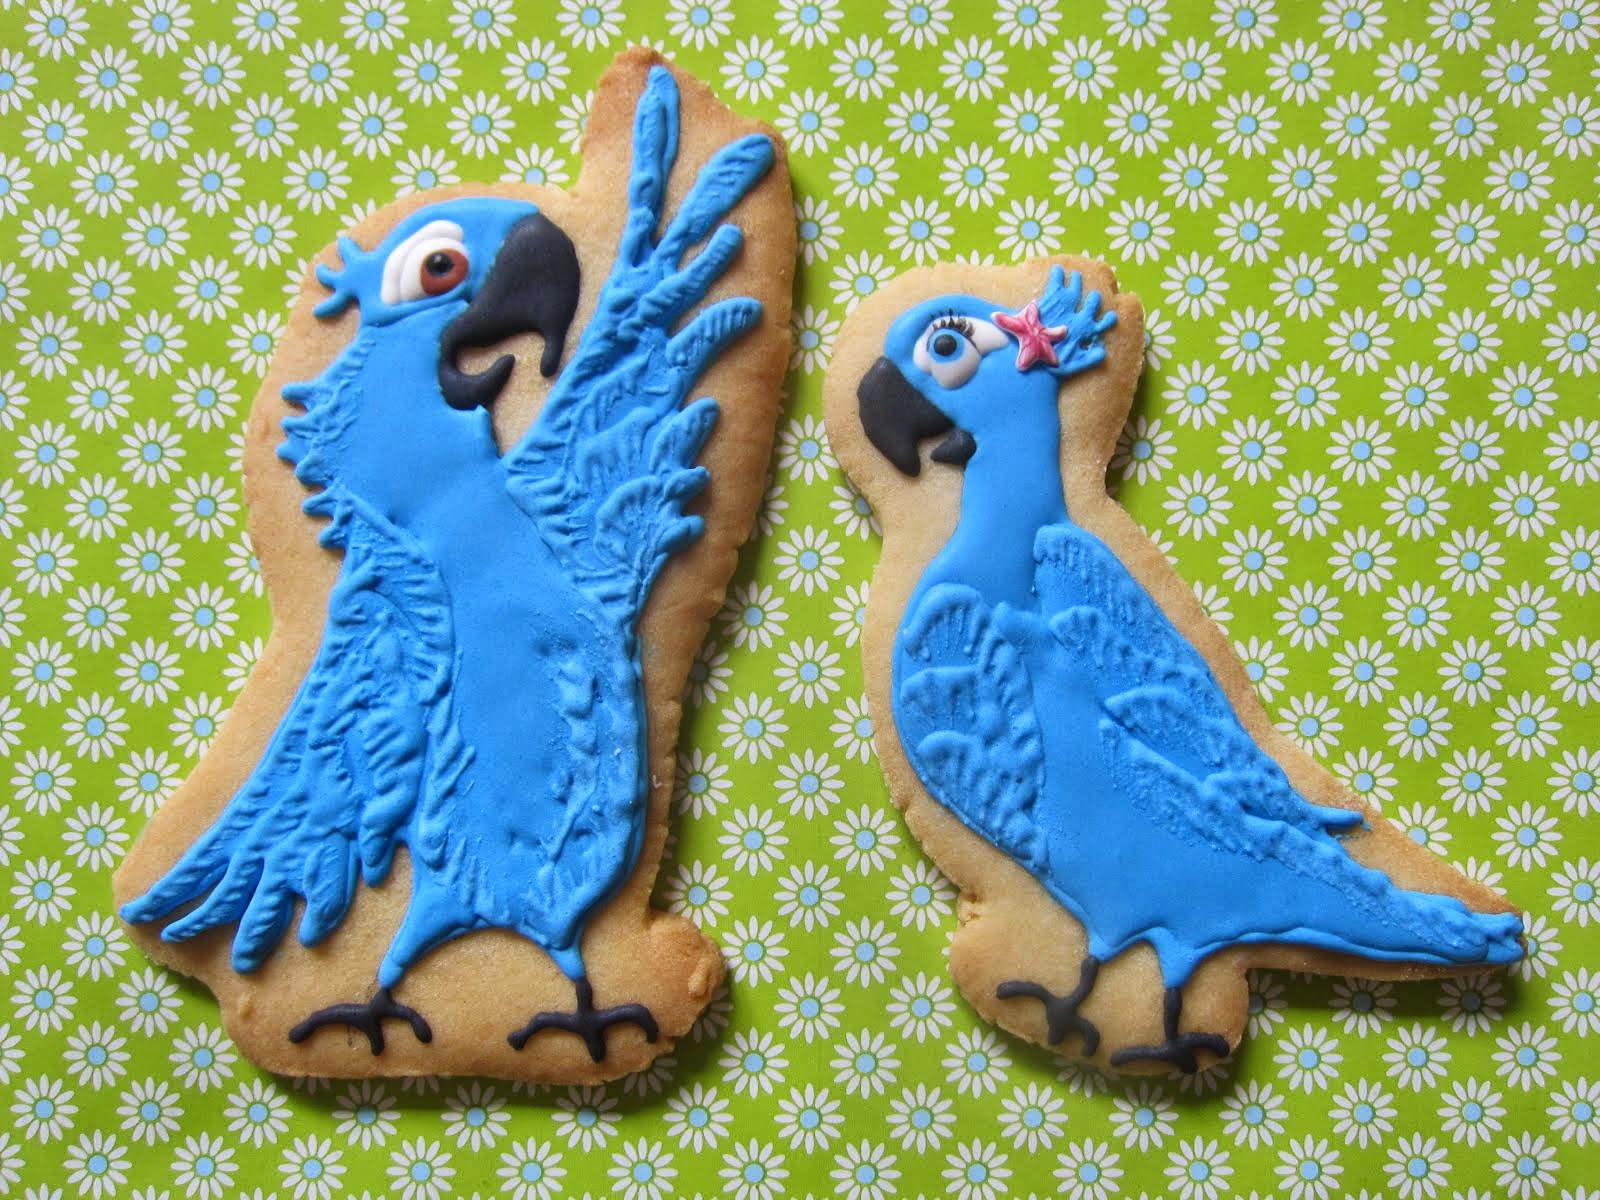 Rio kekszek / Rio cookies